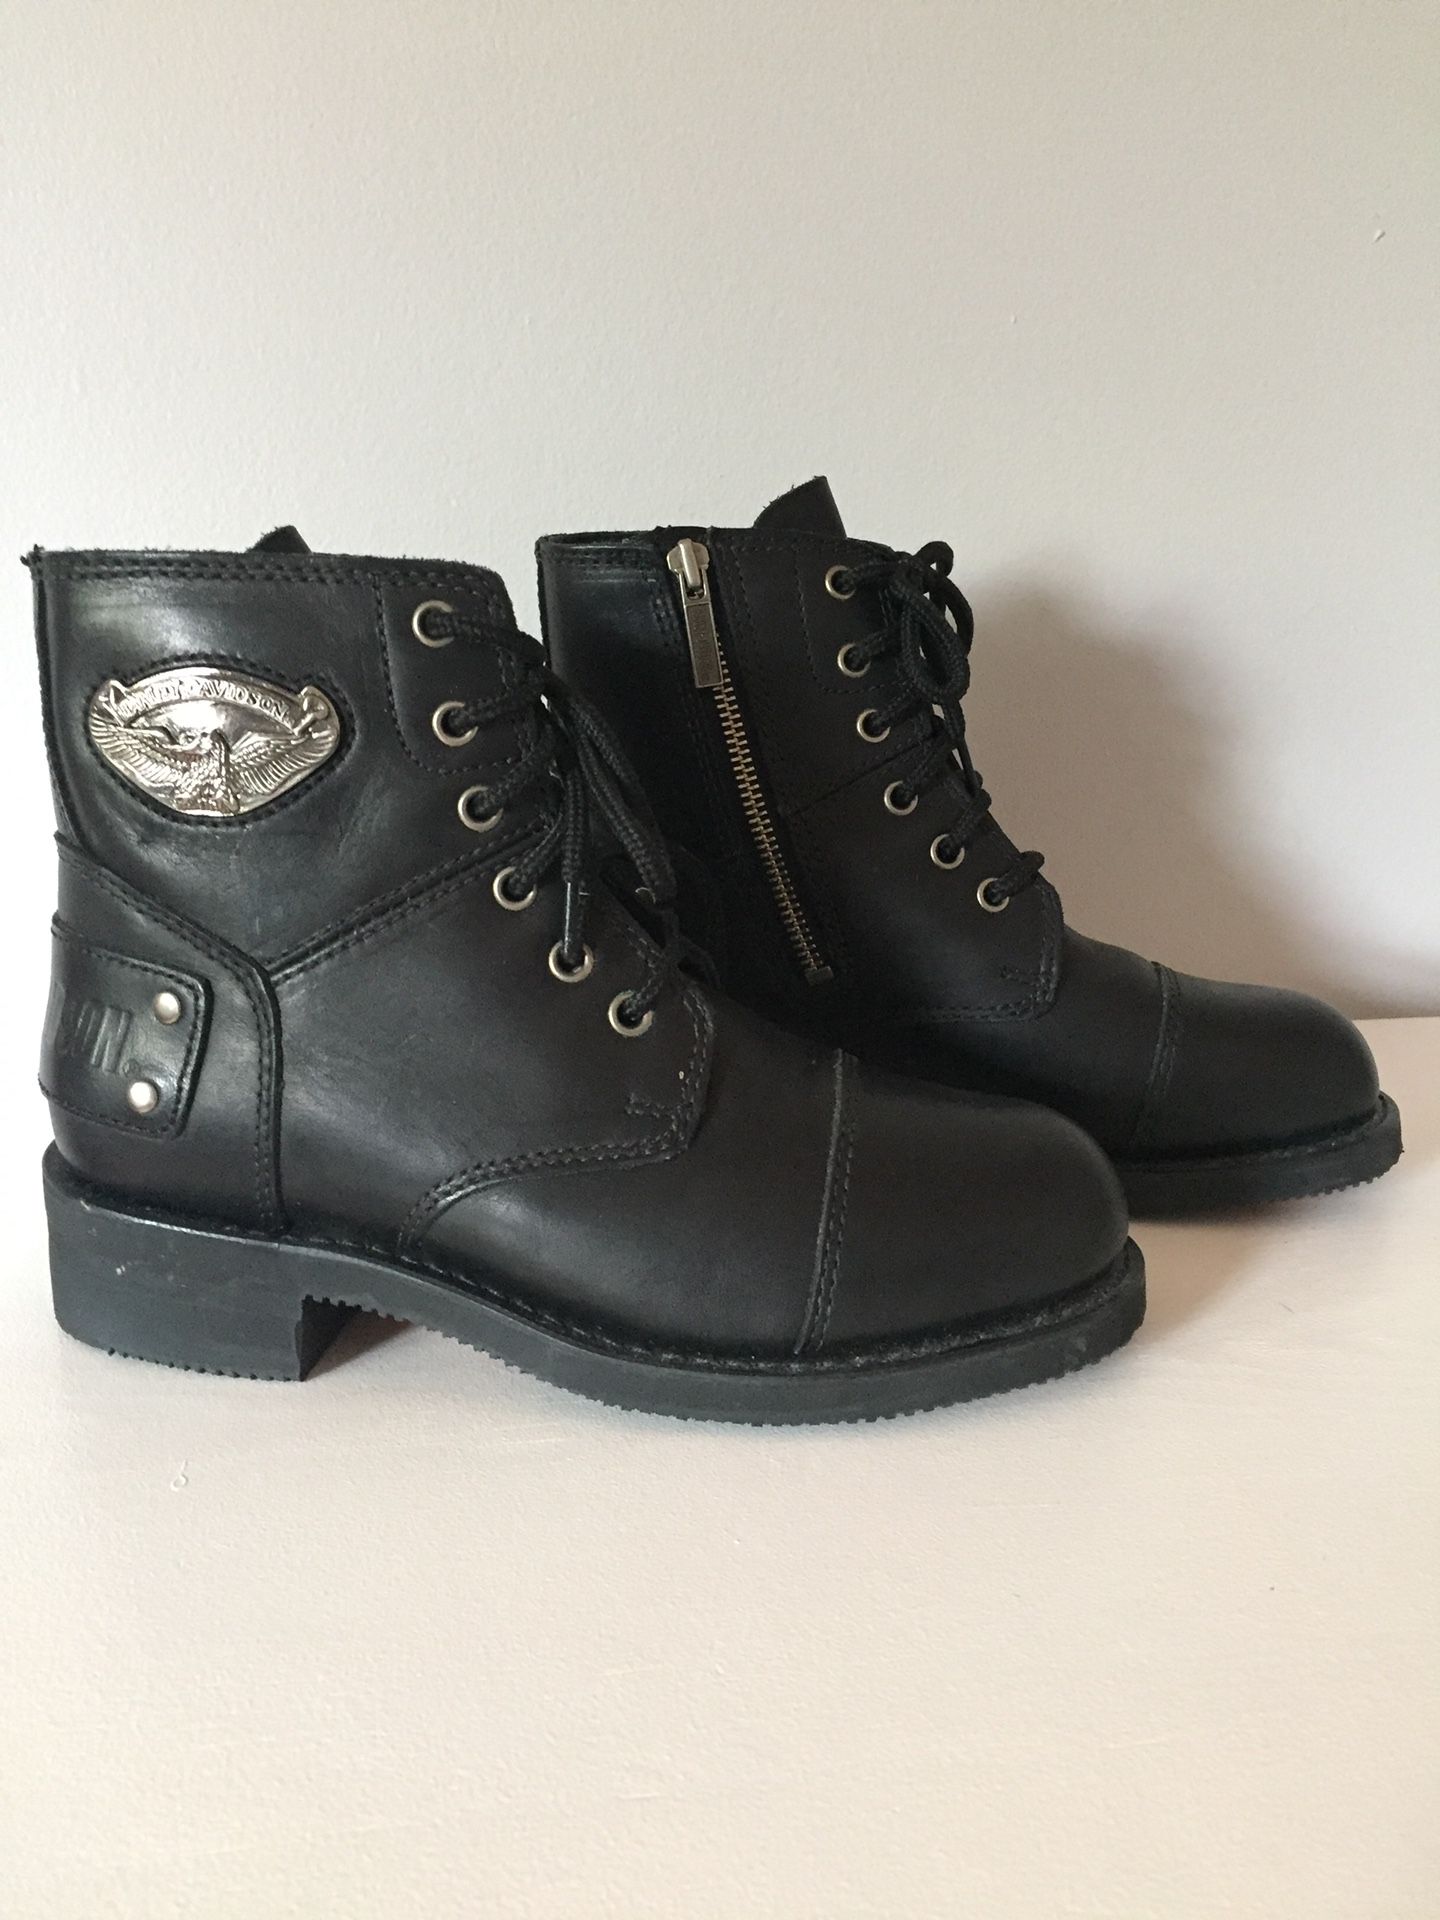 Harley Davidson Women’s Boots 7.5 Never Worn